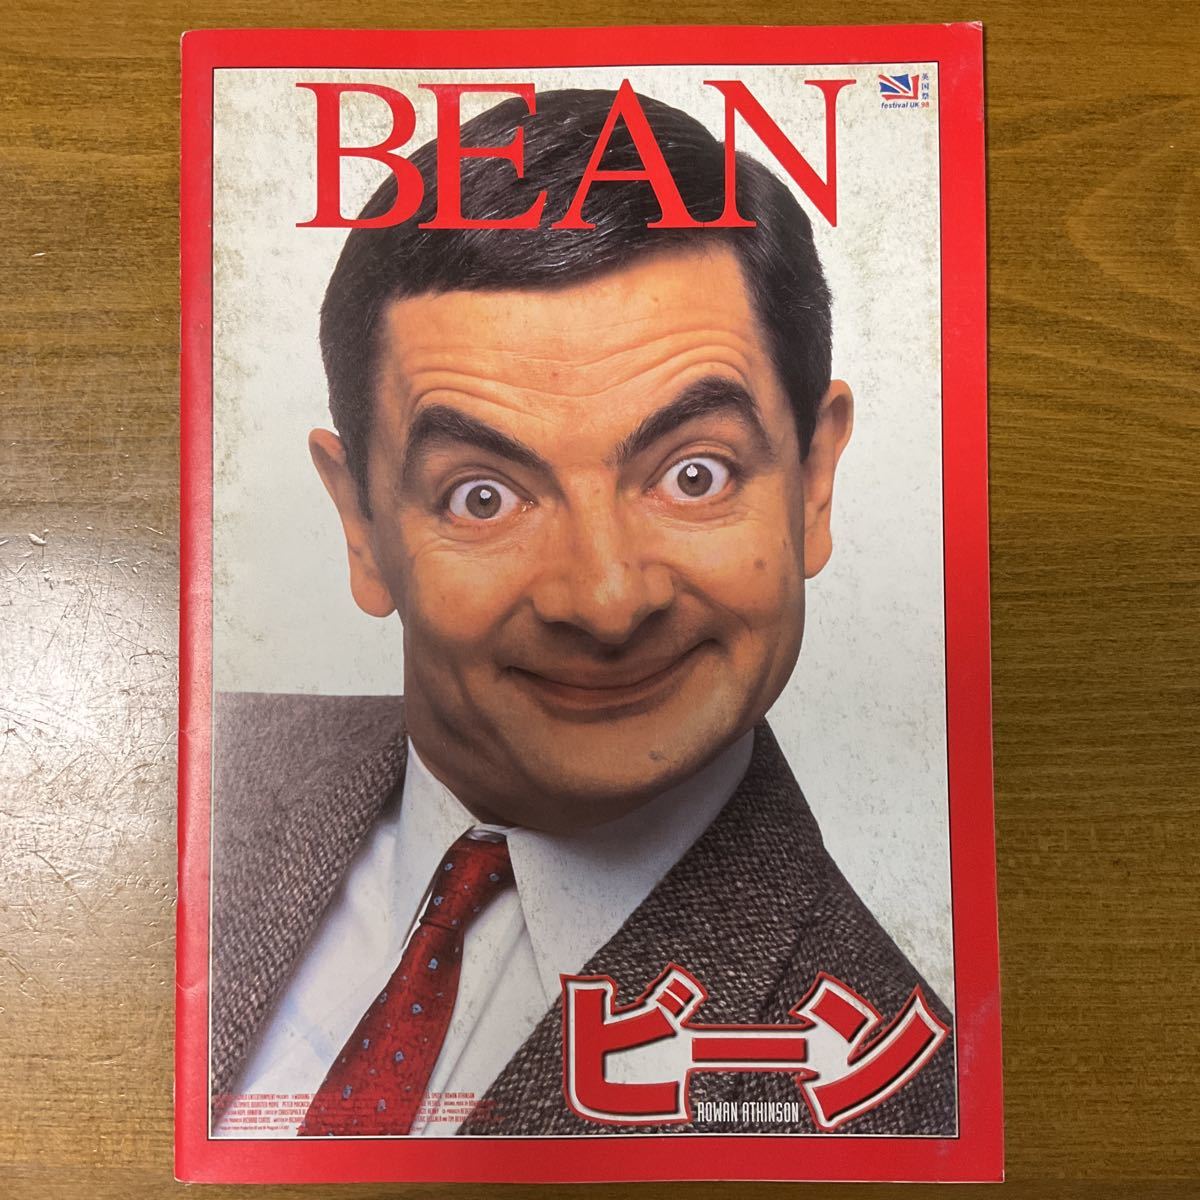  movie pamphlet [BEAN bean ]